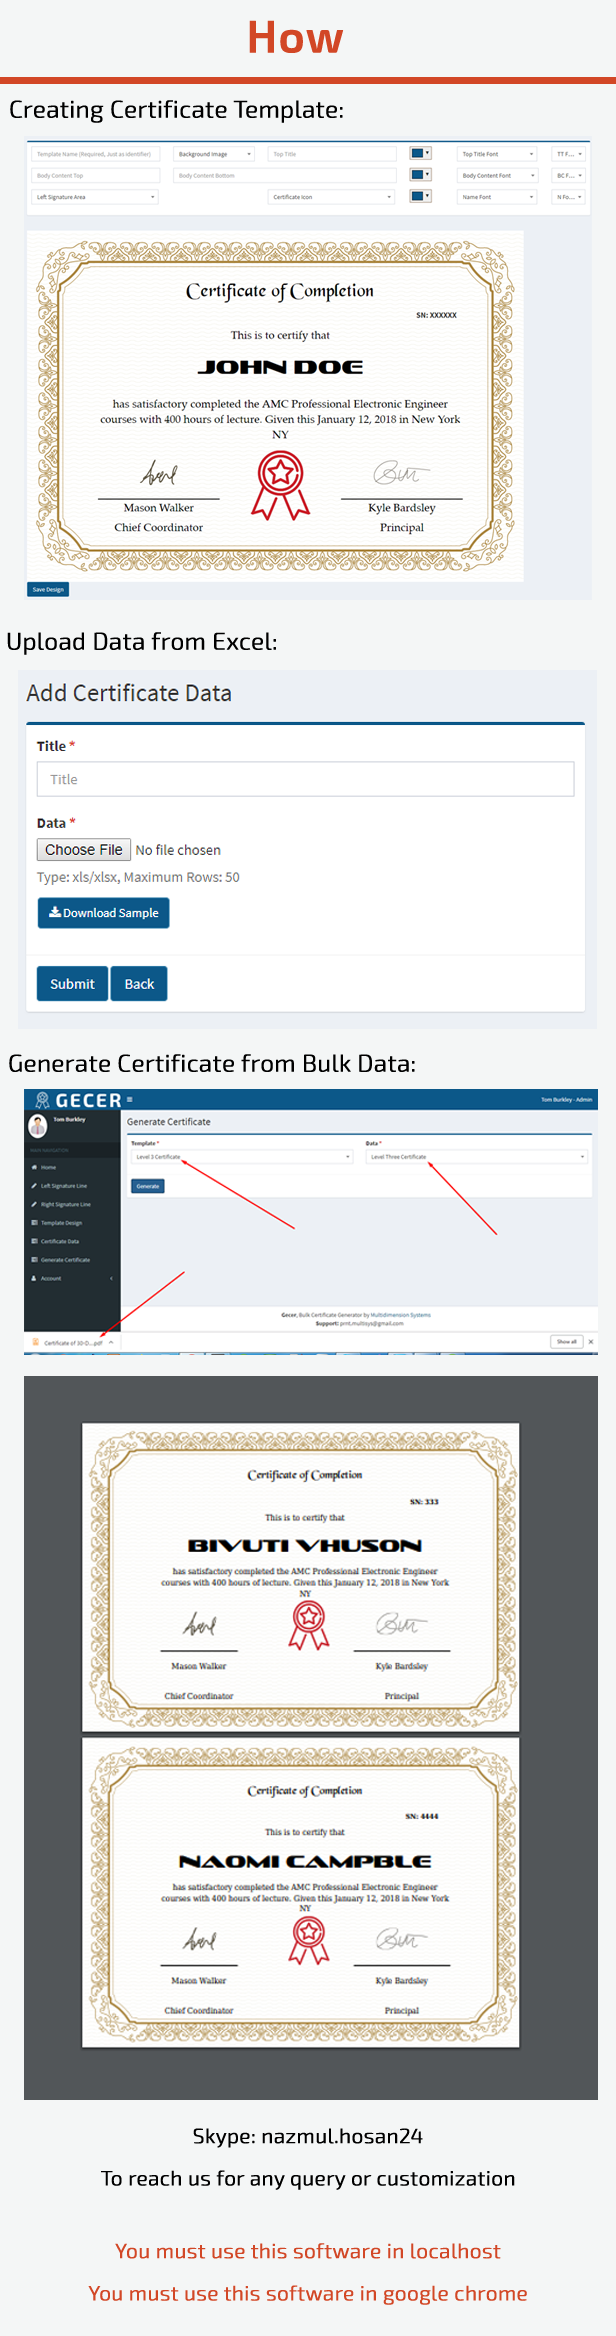 creating certificate template 